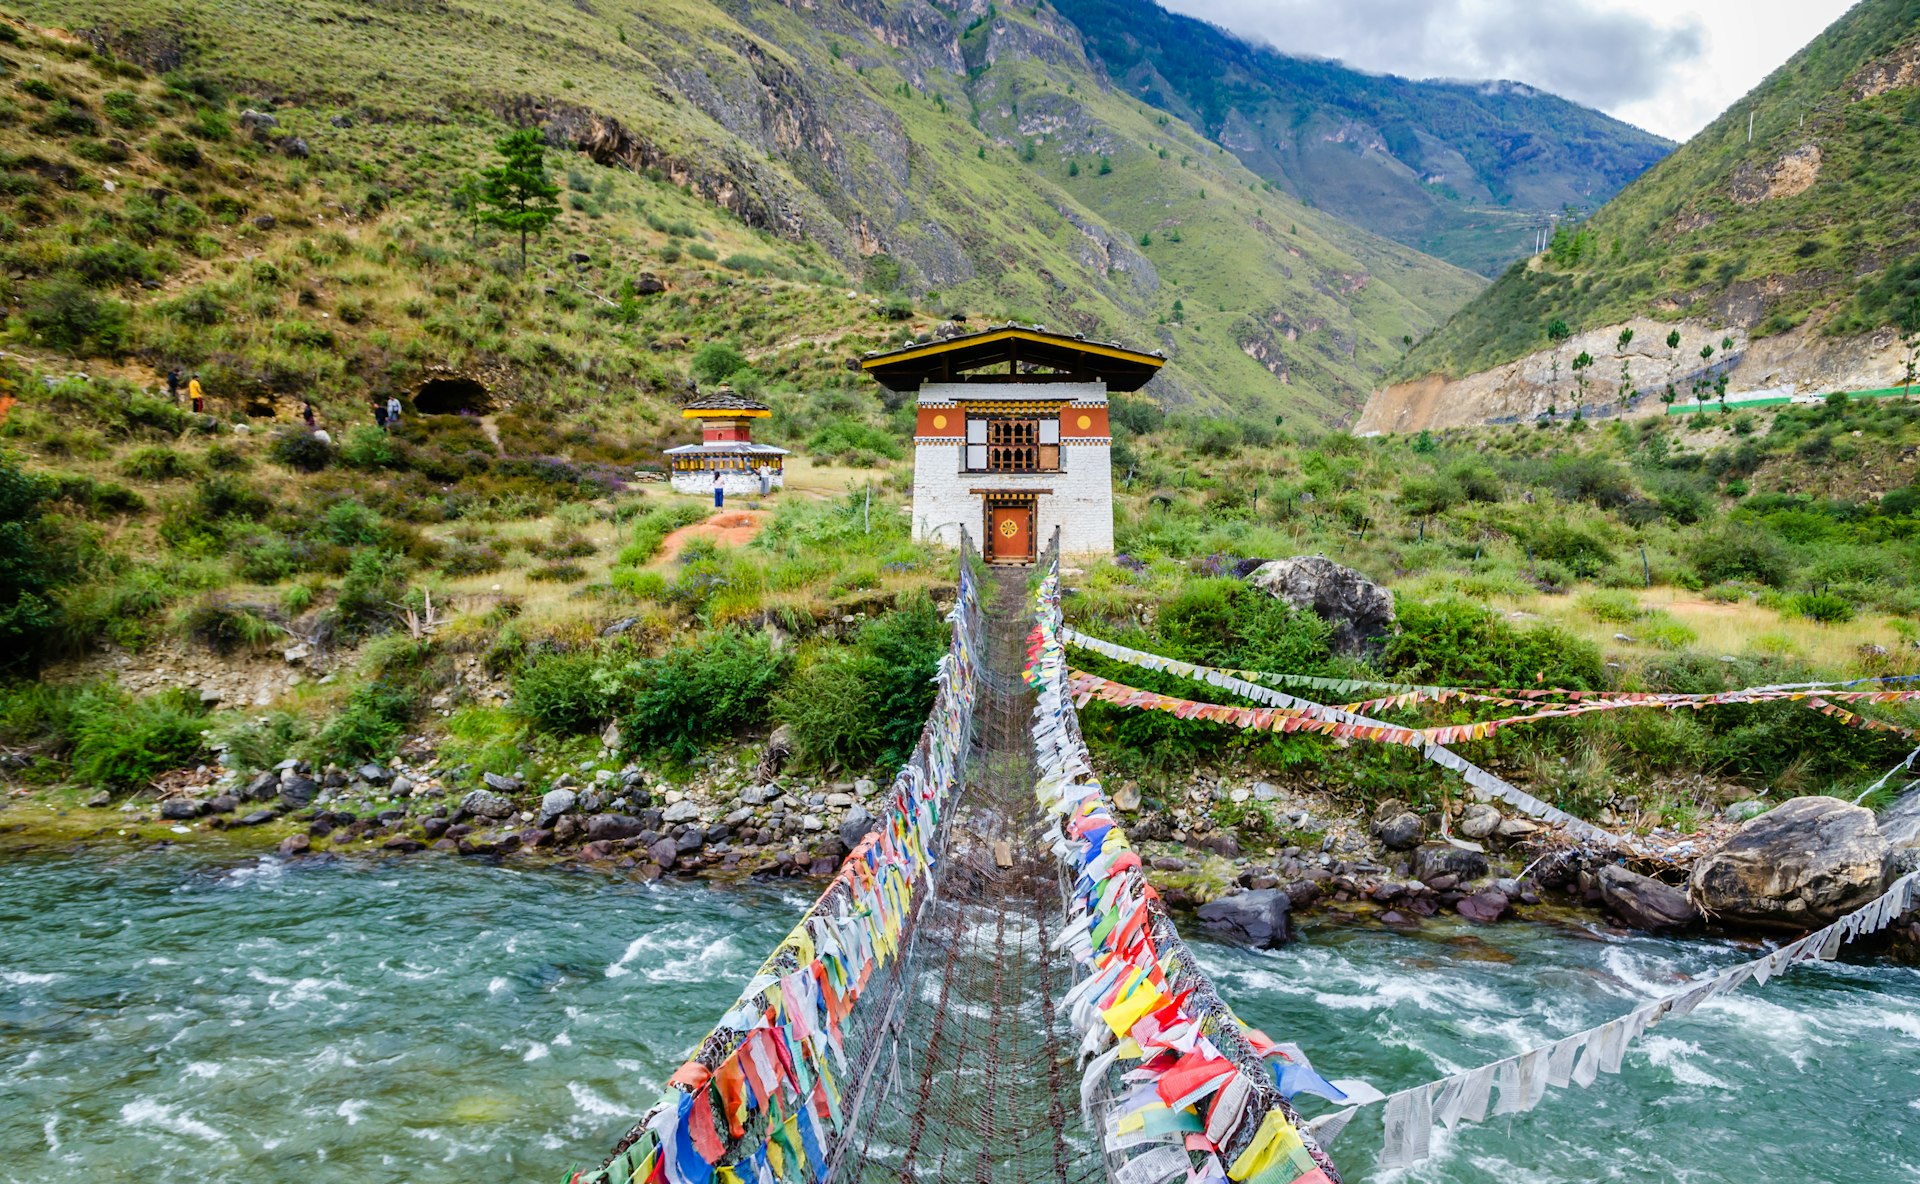 Iron-chain bridge of Tamchog Lhakhang Monastery, Paro River, Bhutan